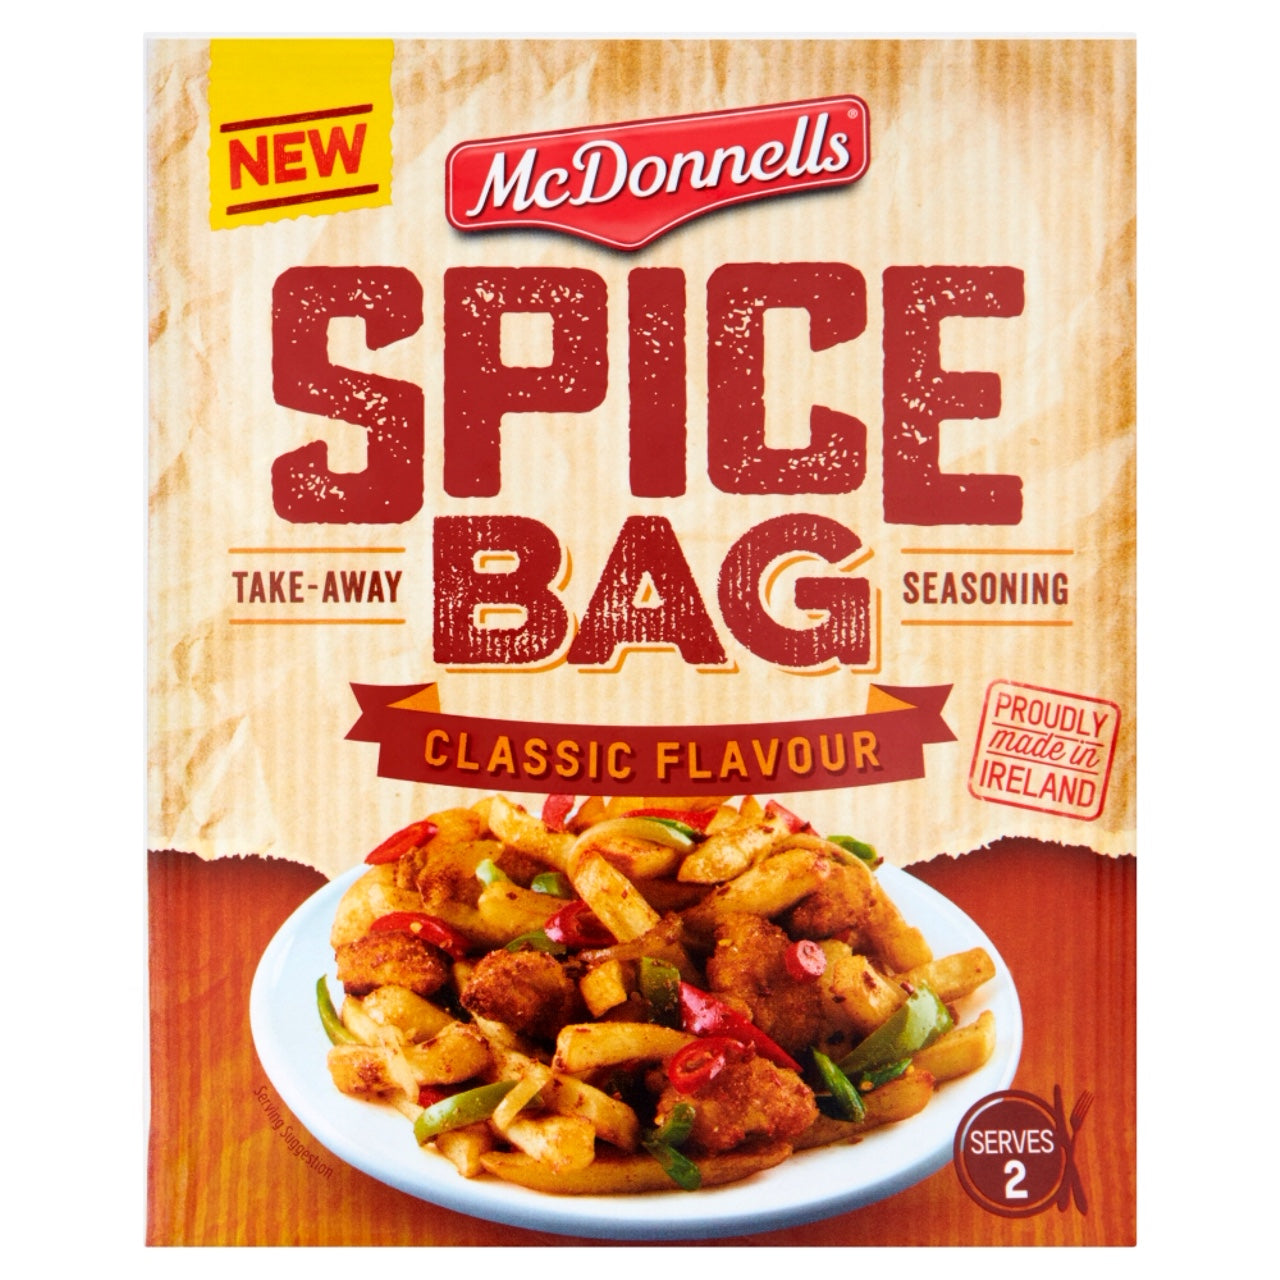 6 x Mcdonnells Spice Bag Original 40G